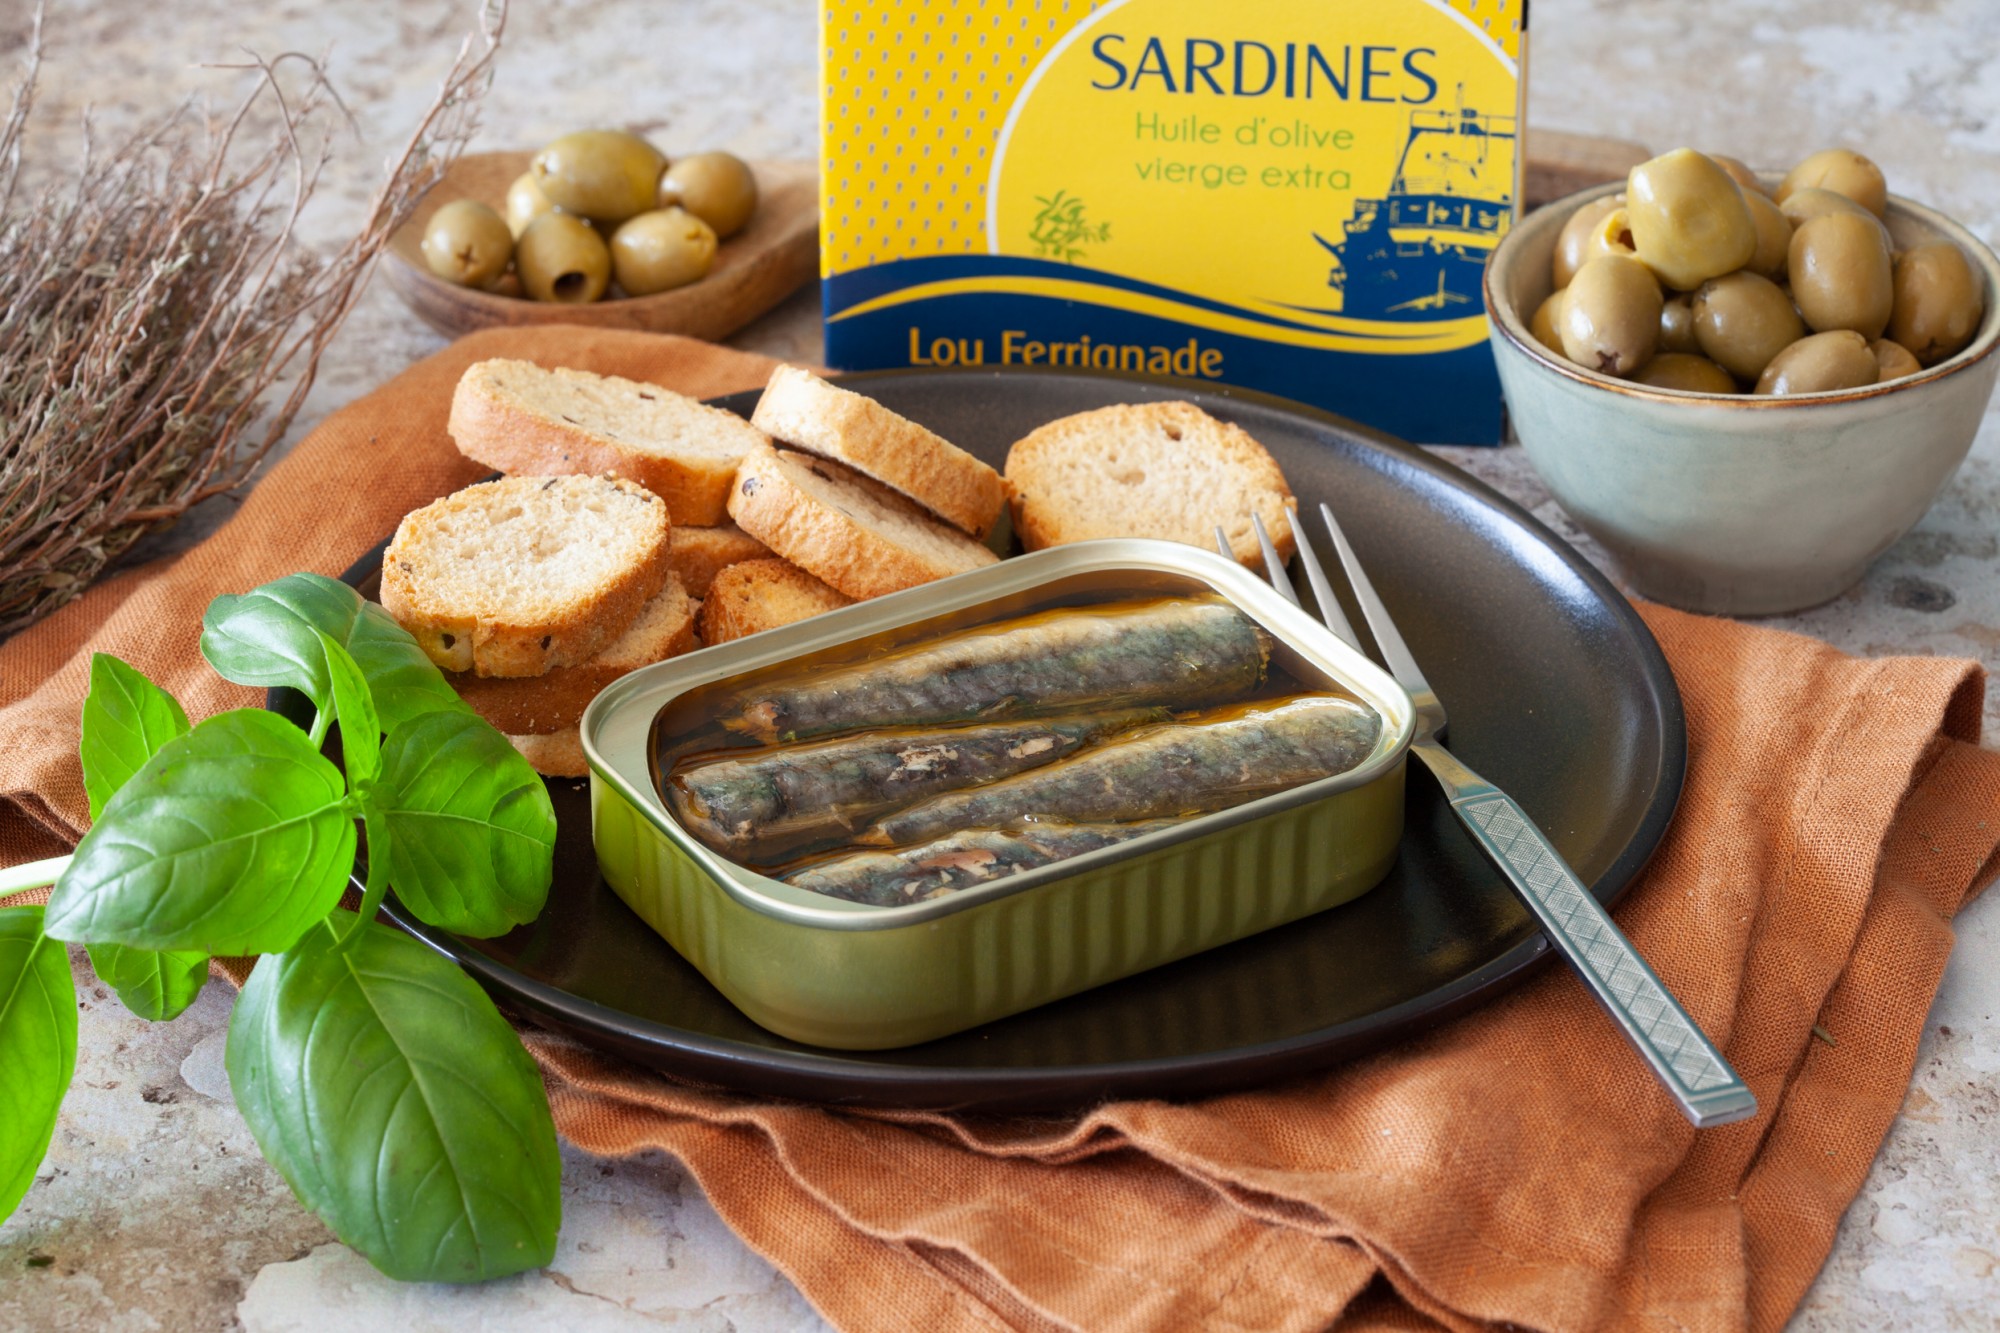 Sardines à l'huile d'olive - Lou Ferrignade - 115g